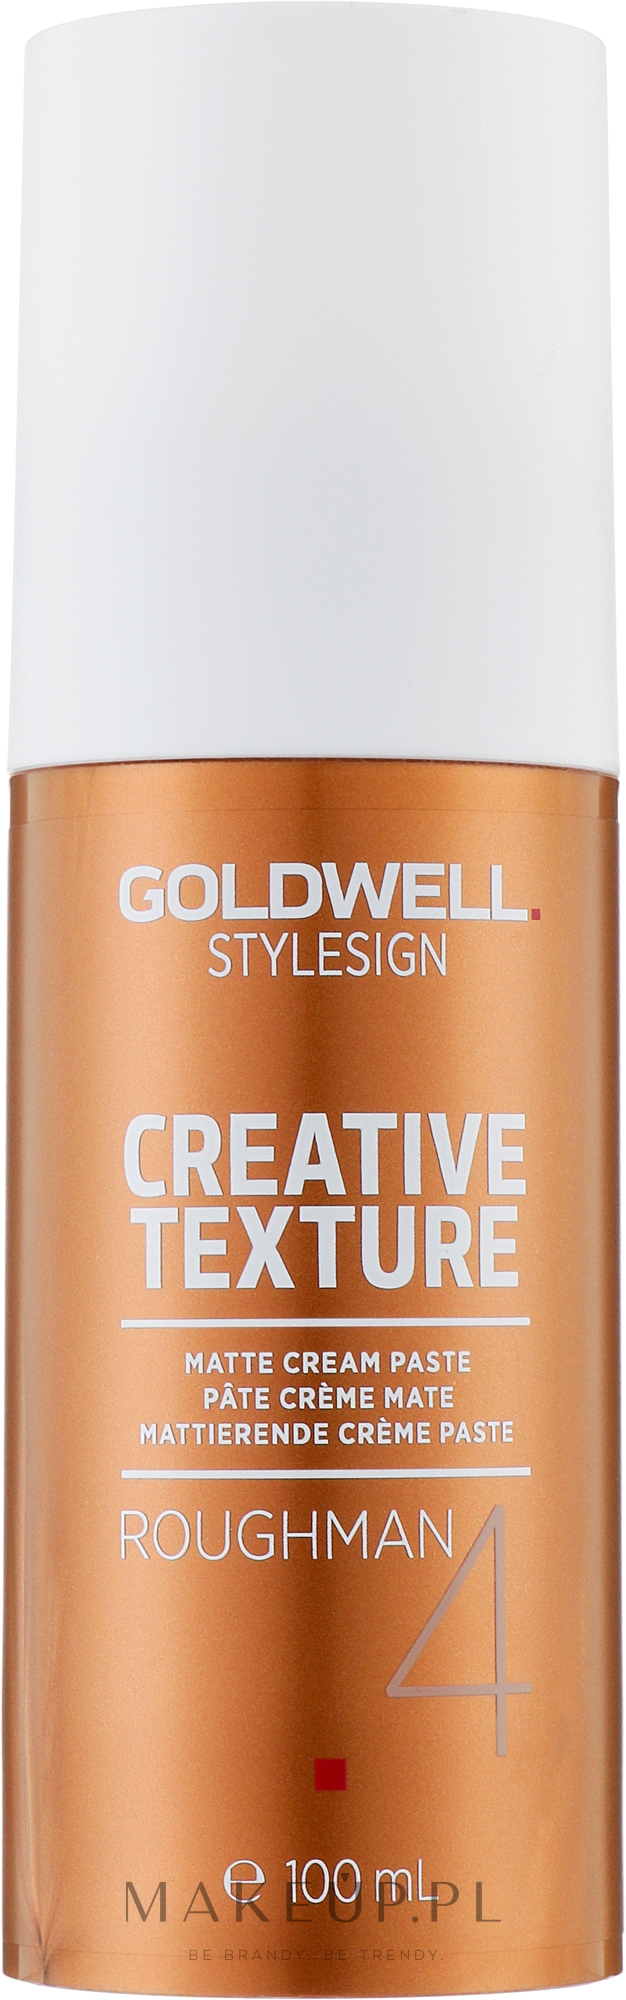 Matująca kremowa pasta do włosów - Goldwell Style Sign Creative Texture Roughman Matte Cream Paste — Zdjęcie 100 ml